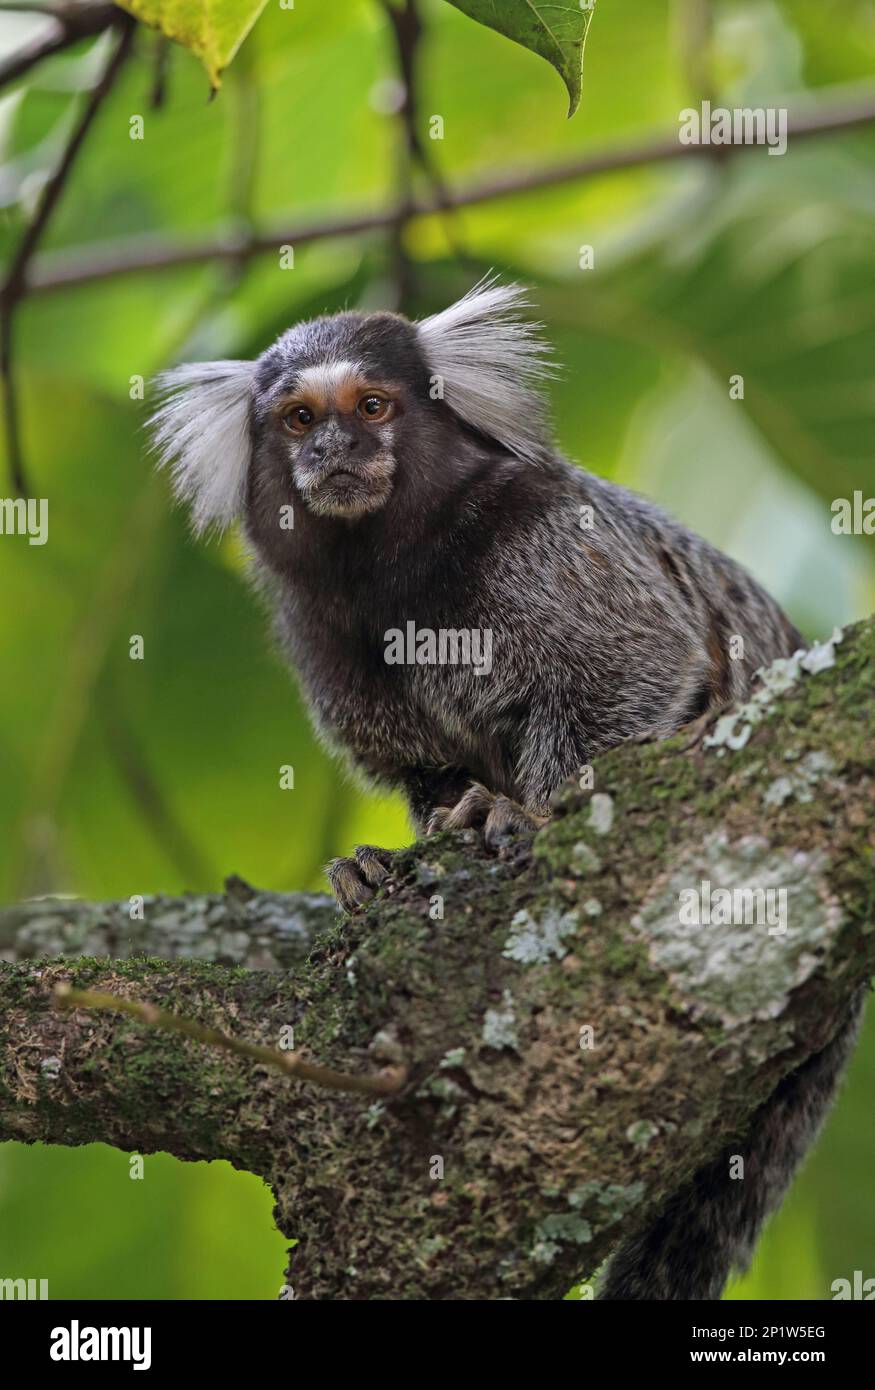 Marmoset (Callithrix jacchus), Erwachsener, auf einem Ast sitzend, Atlantischer Regenwald, Reserva Ecologica de Guapi Assu, Staat Rio de Janeiro, Brasilien Stockfoto